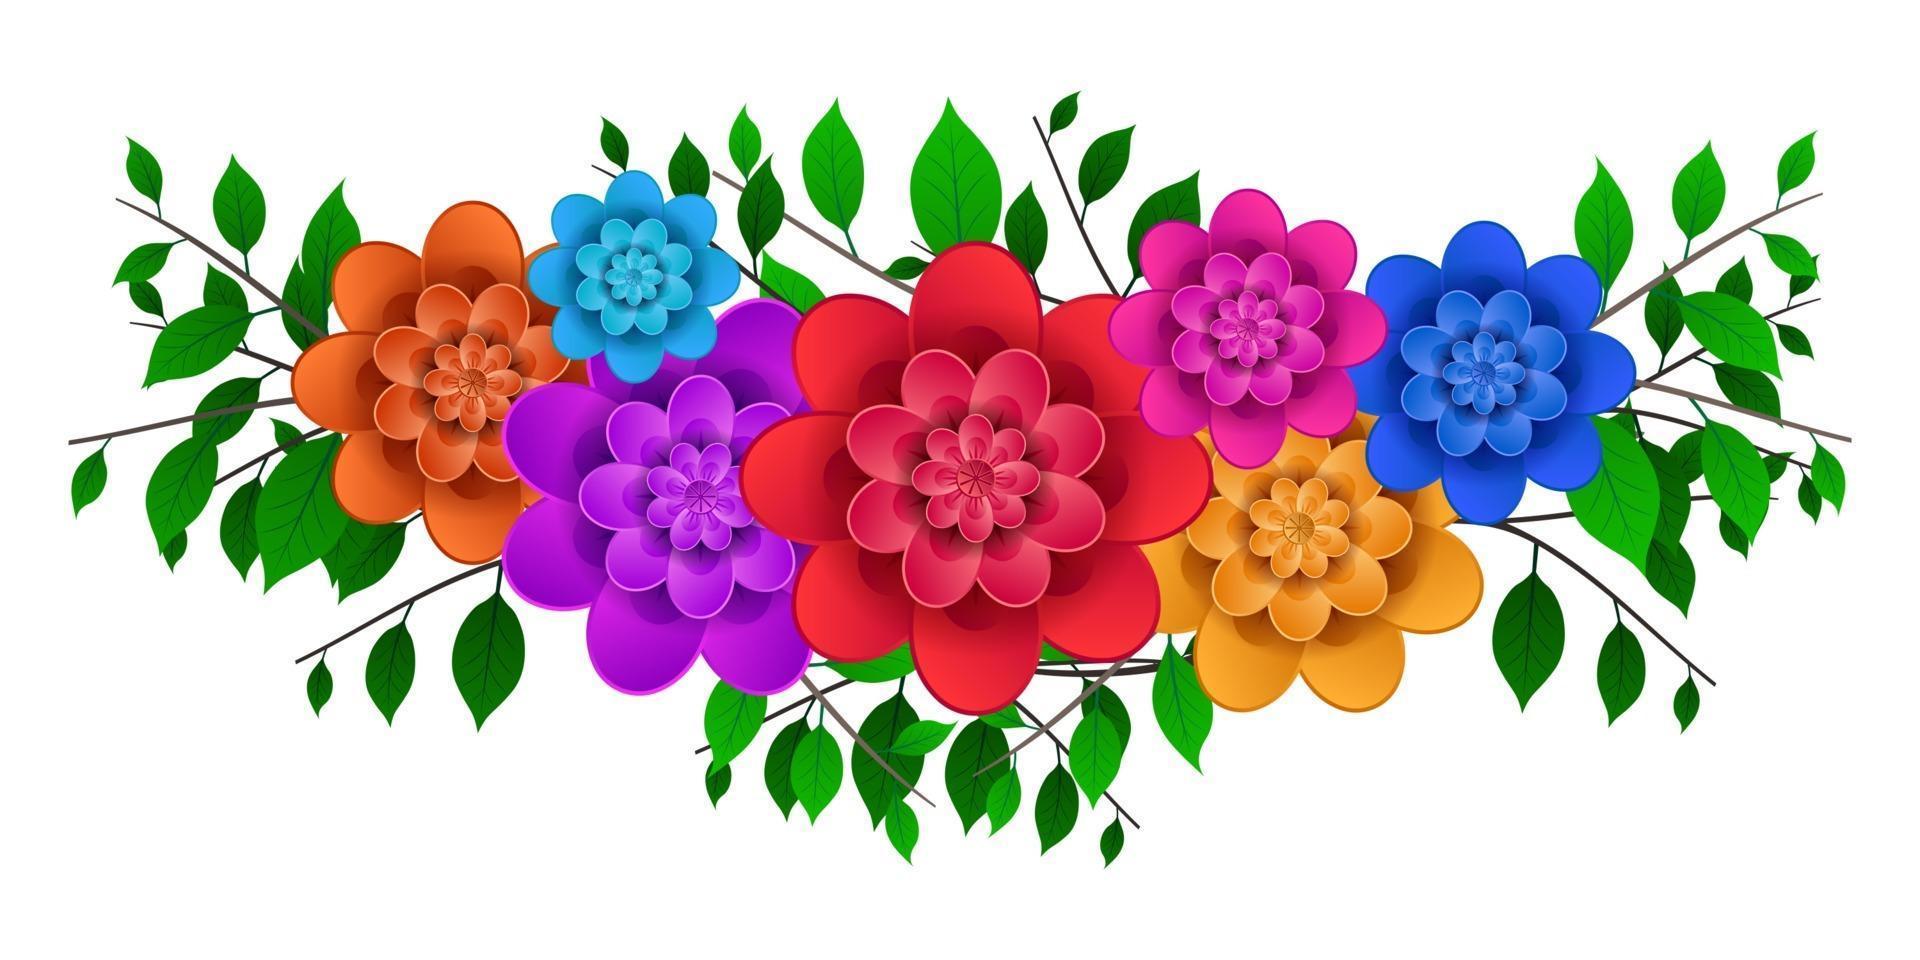 Flowers bouquet border cartoon vector